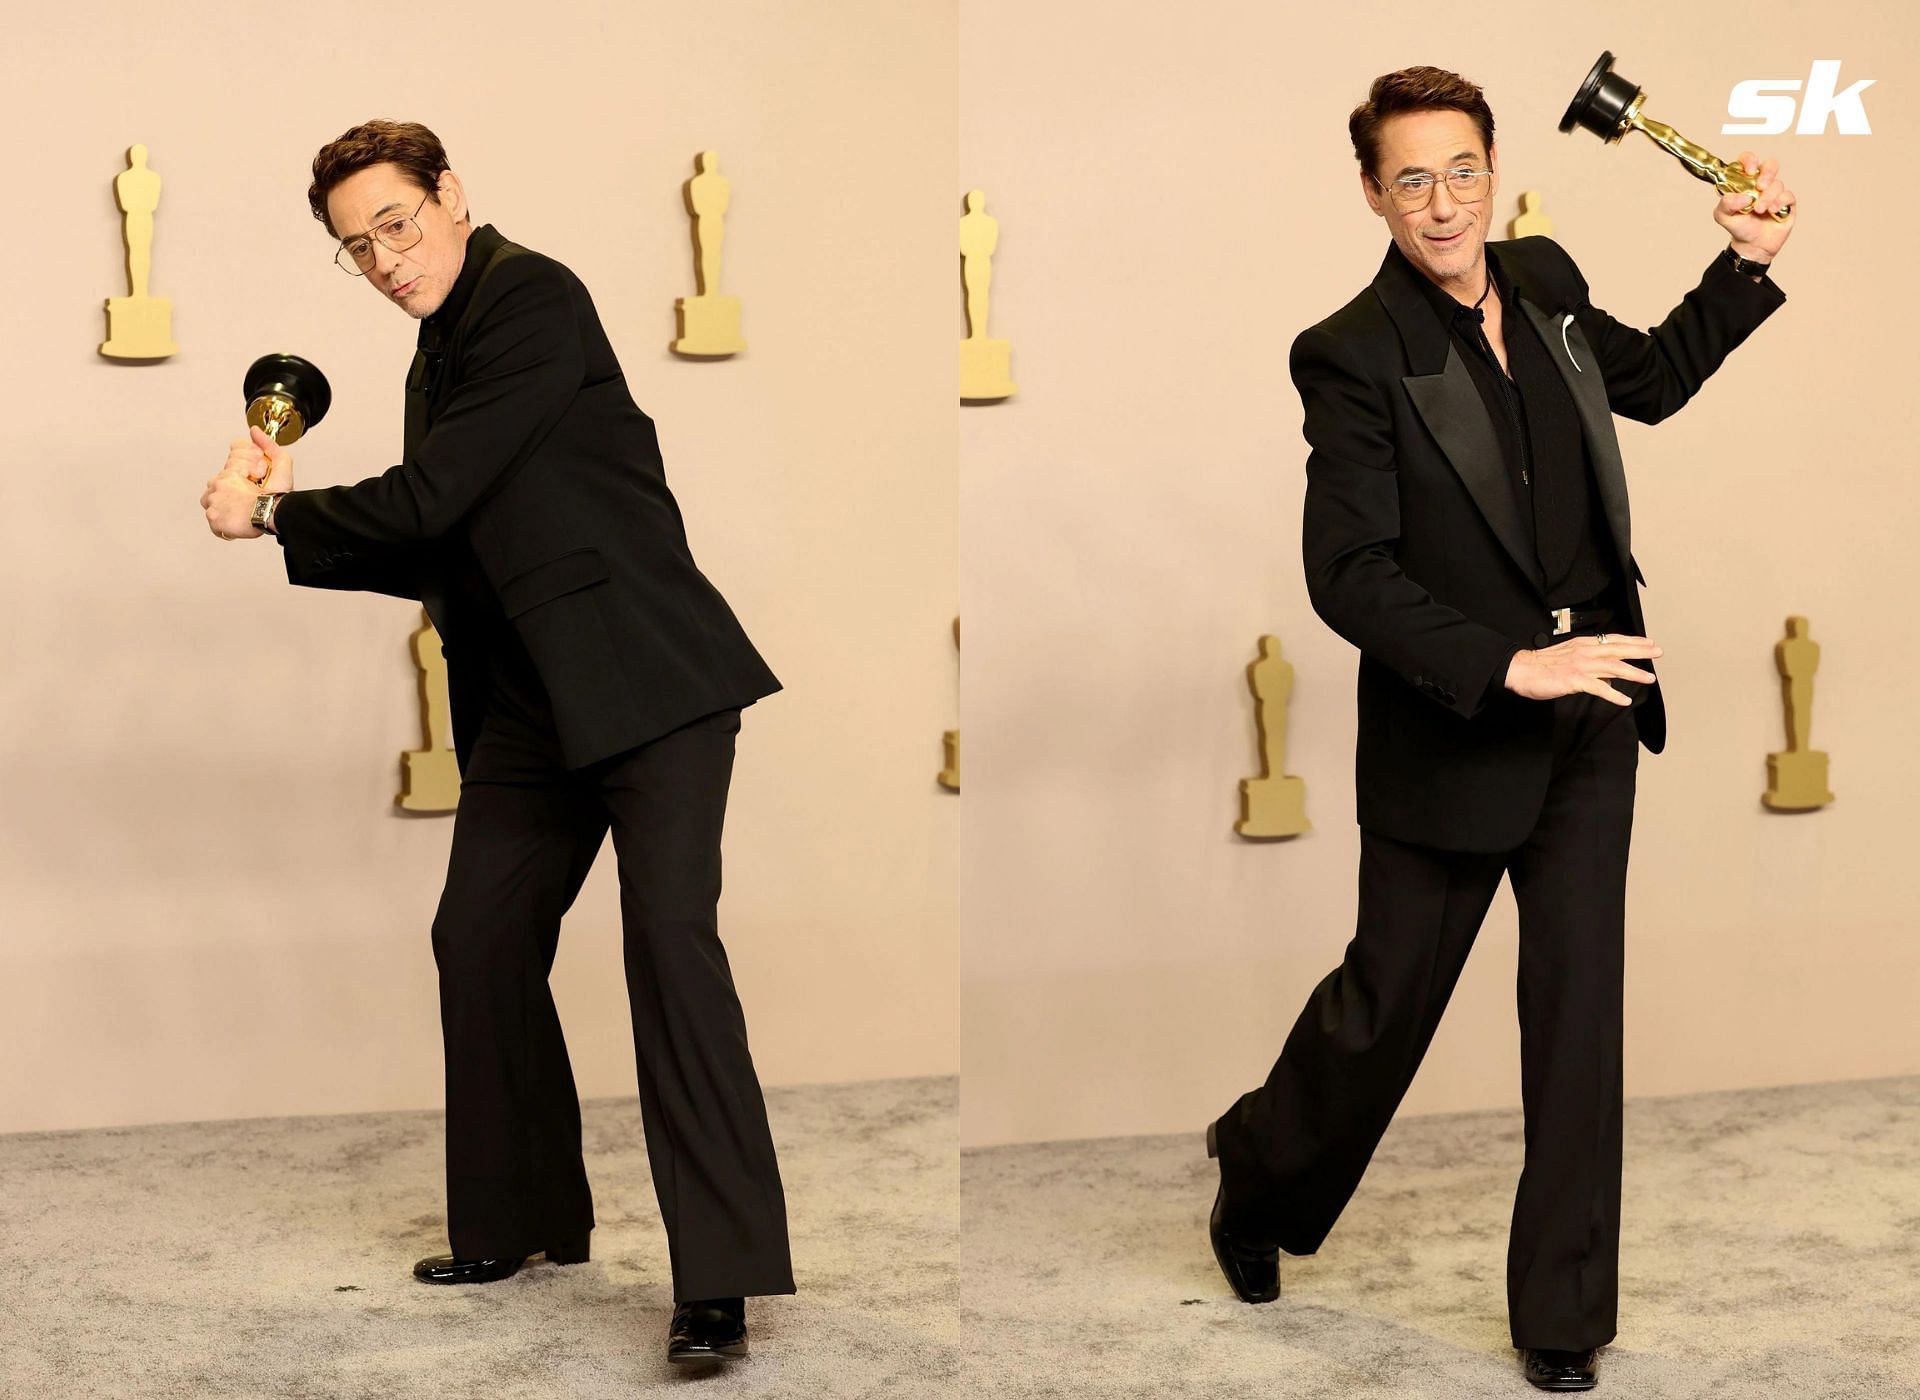 Robert Downey Jr. using his Oscar as a baseball bat